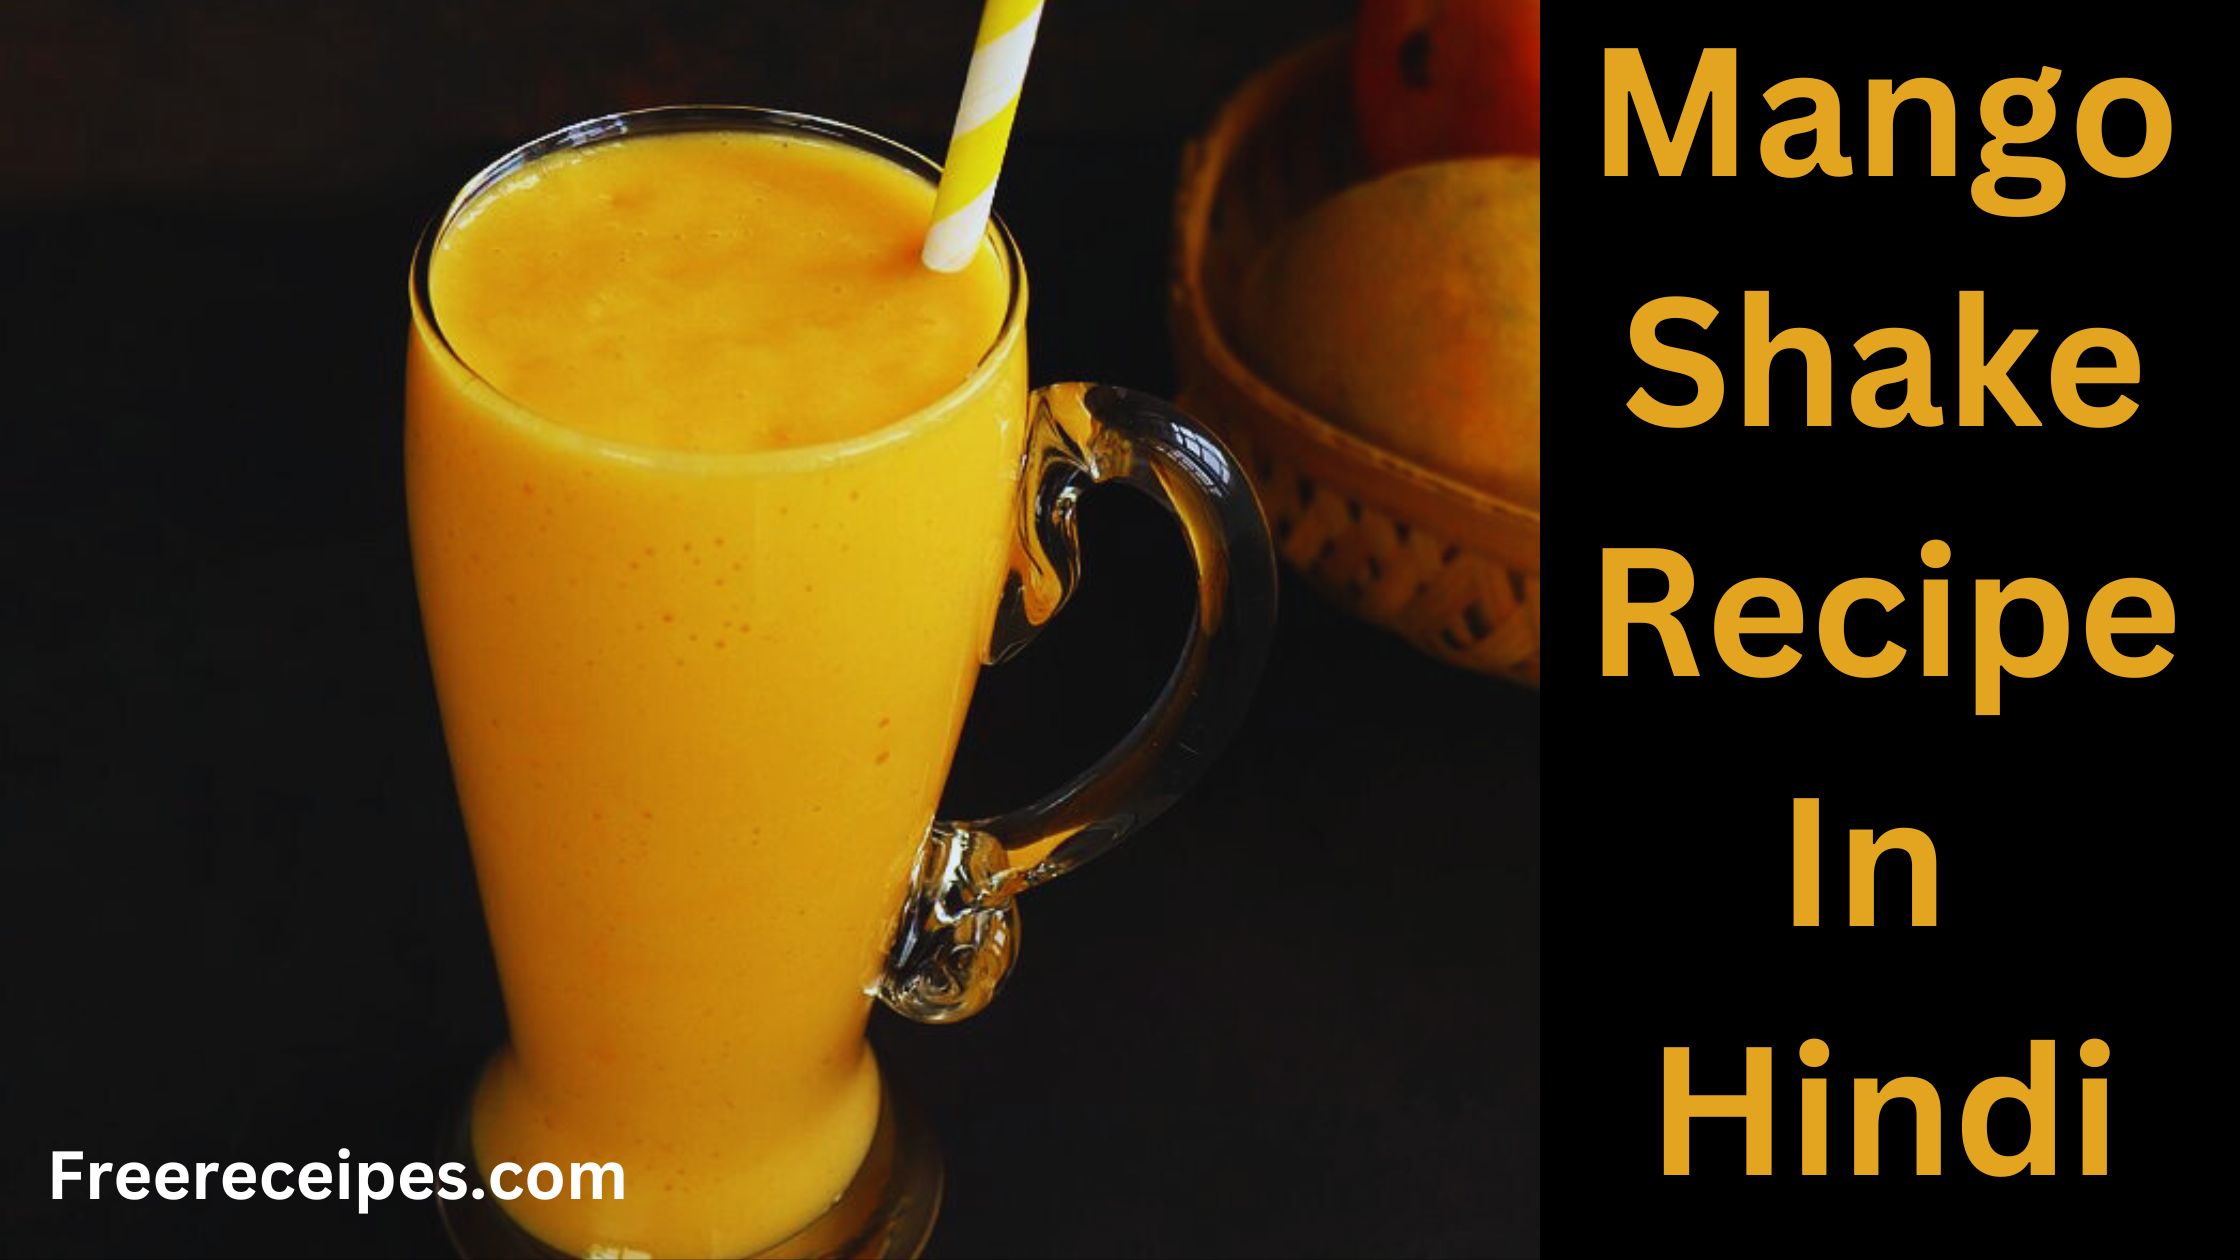 Mango Shake Recipe In Hindi